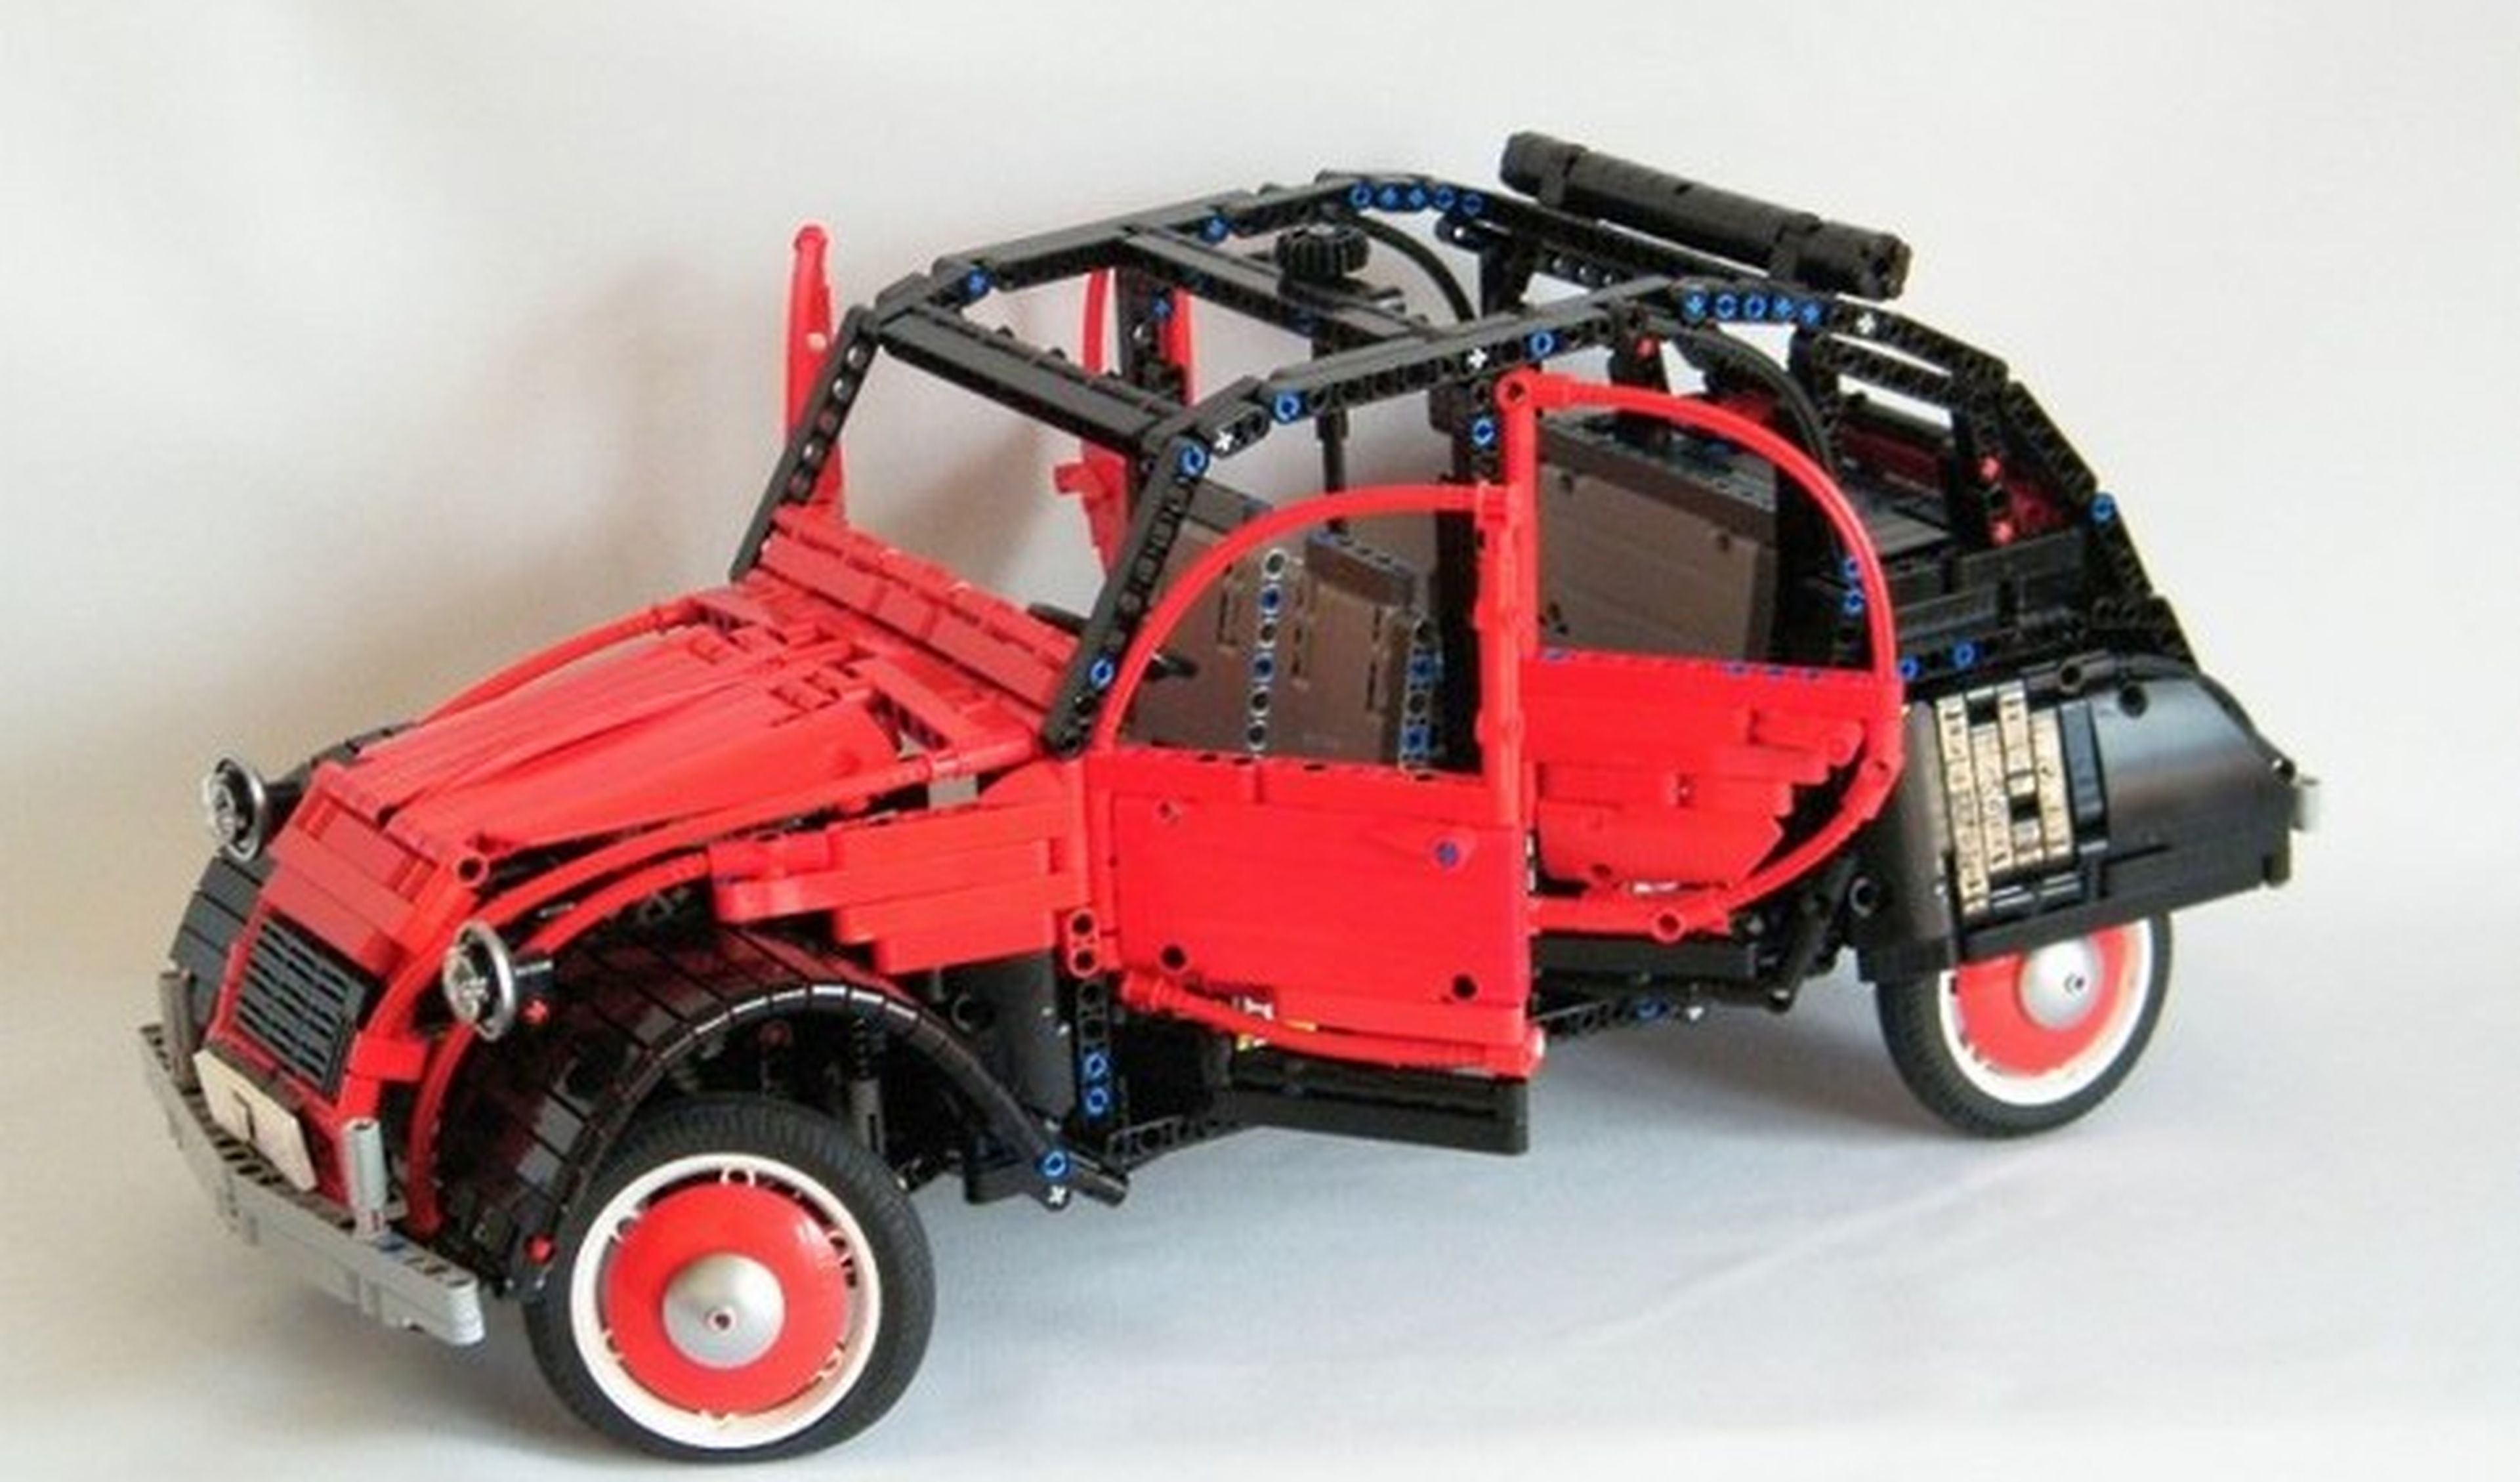 Este Citroën 2CV de Lego parece de verdad